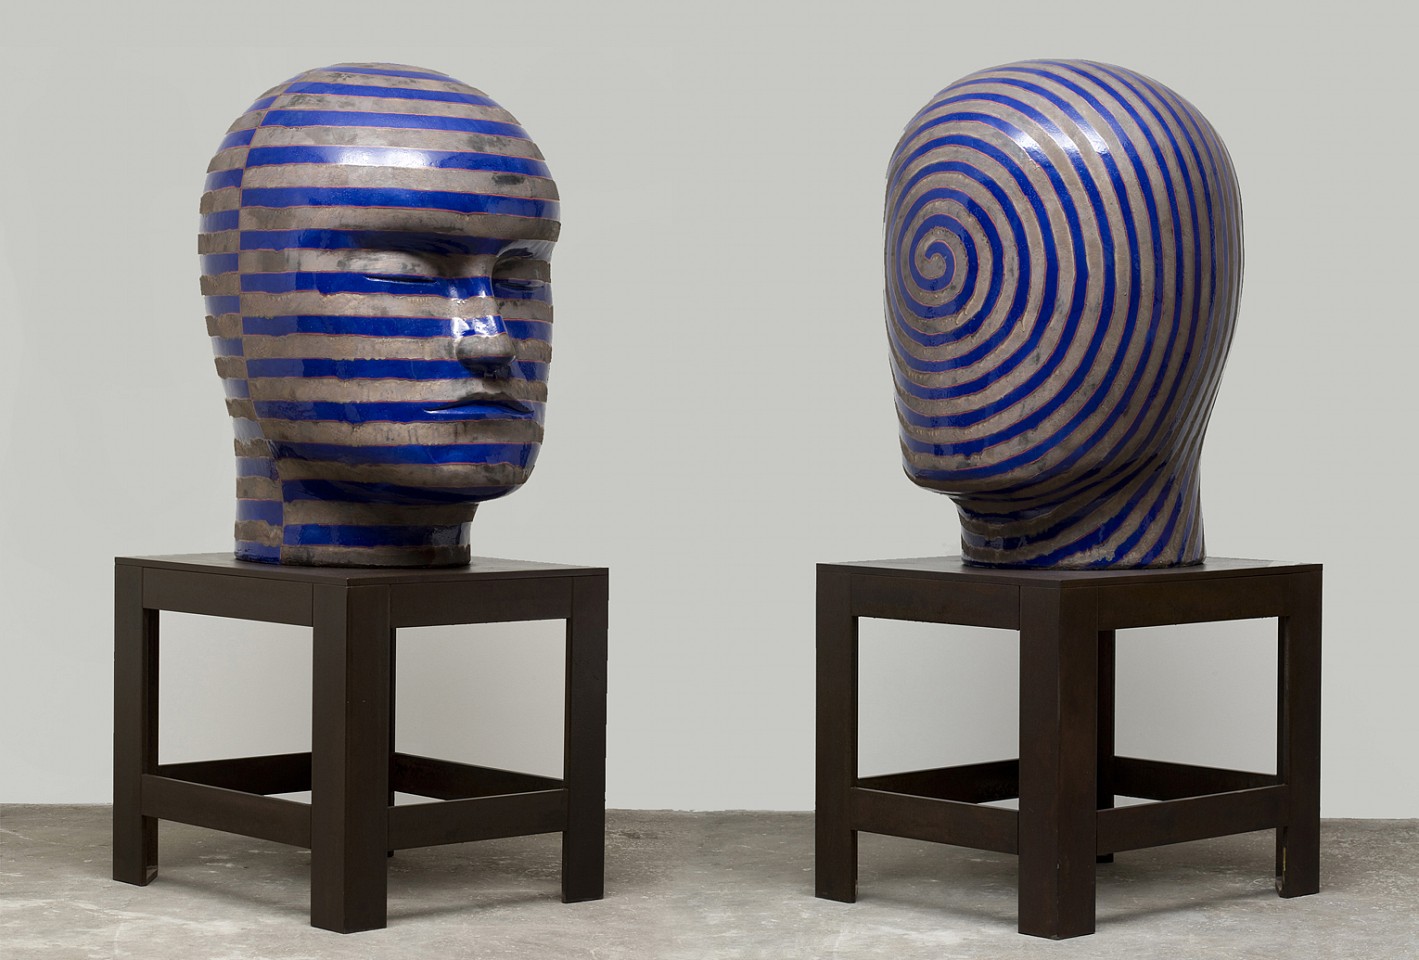 Jun Kaneko, Heads 08-07-07, 2008
Glazed Ceramic, 48 x 33 x 36 inches
KANE0046